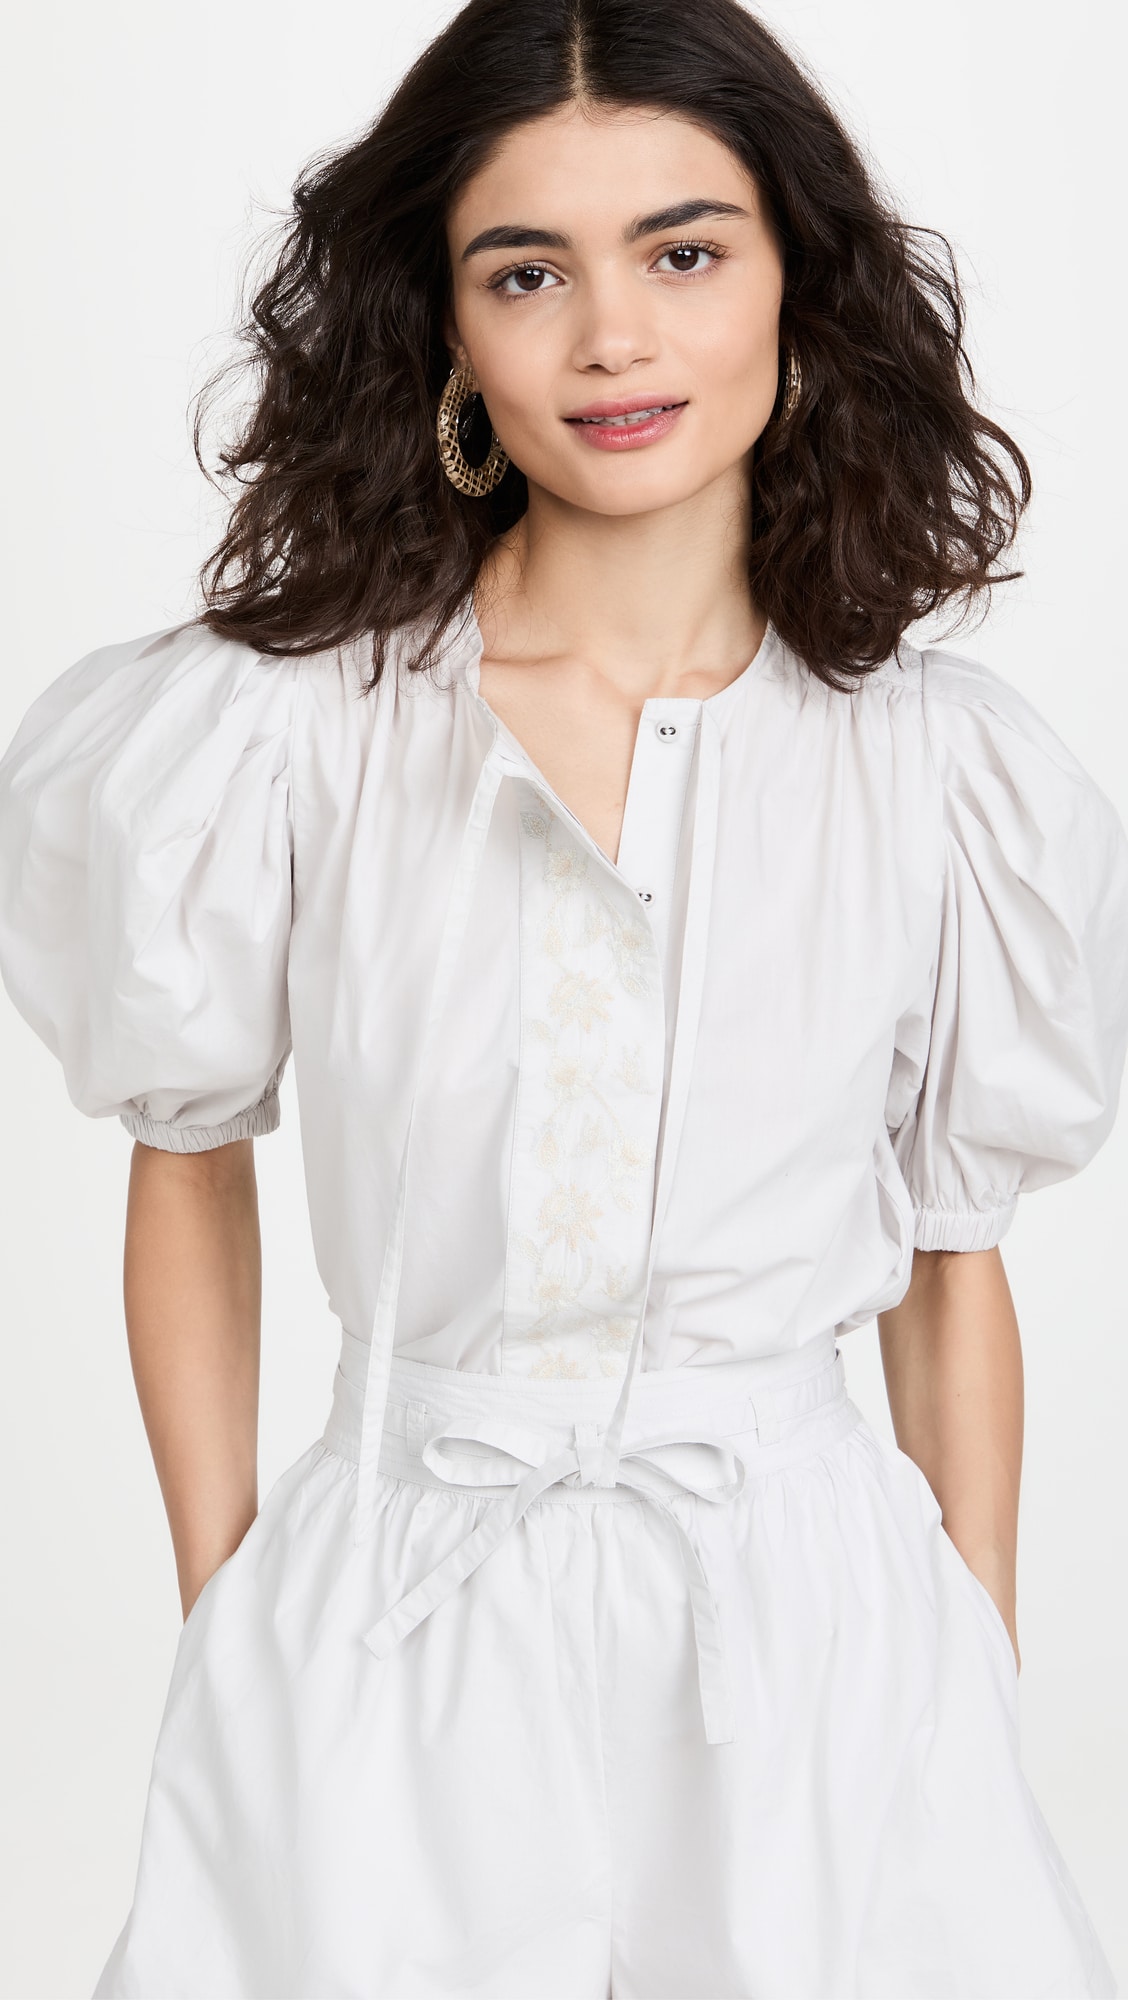 White Blouse from Ulla Johnson - Shopbop - white blouse - fashion - fashion essentials - spring blouses - statement blouses